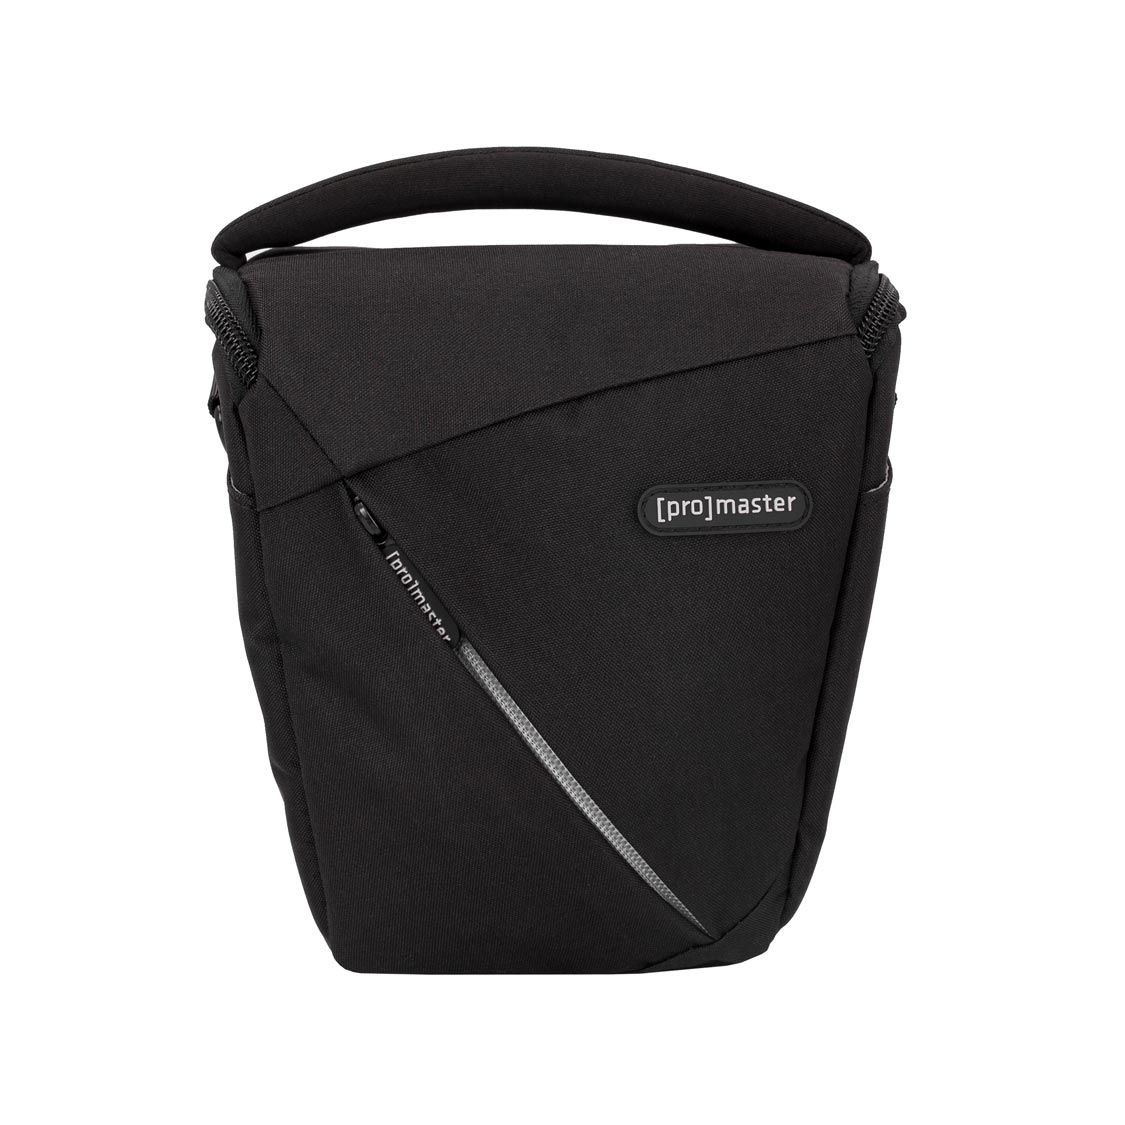 Promaster Impulse Holster Bag Large (black)